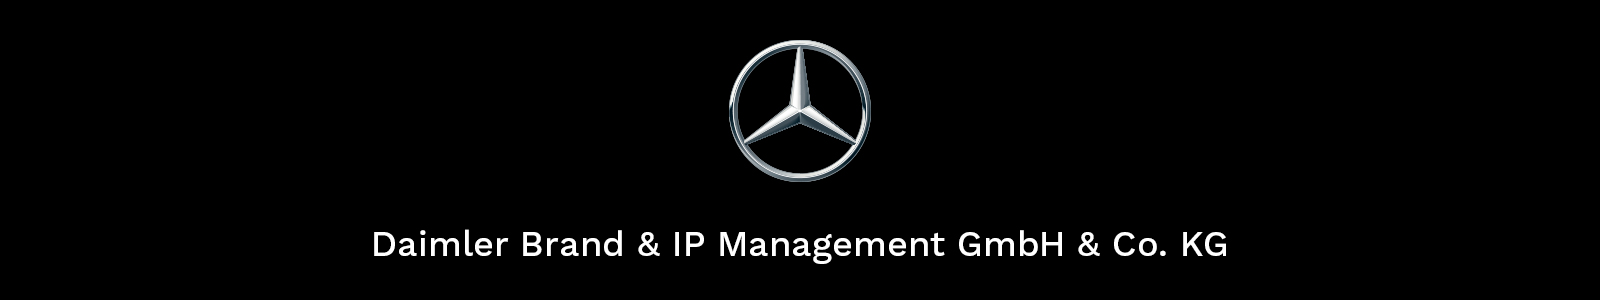 Daimler Brand & IP Management GmbH & Co. KG